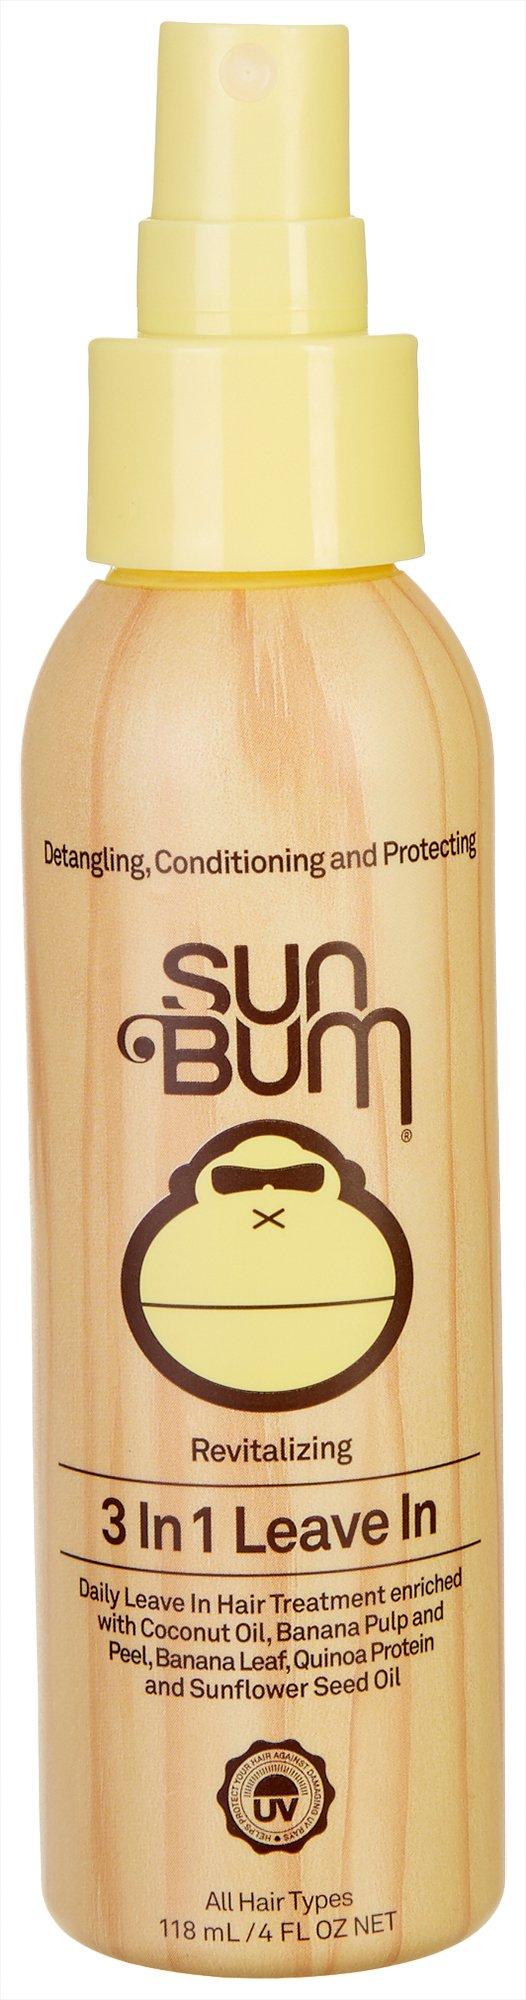 Sun Bum 3-In-1 Leave In Revitalizing Daily Hair